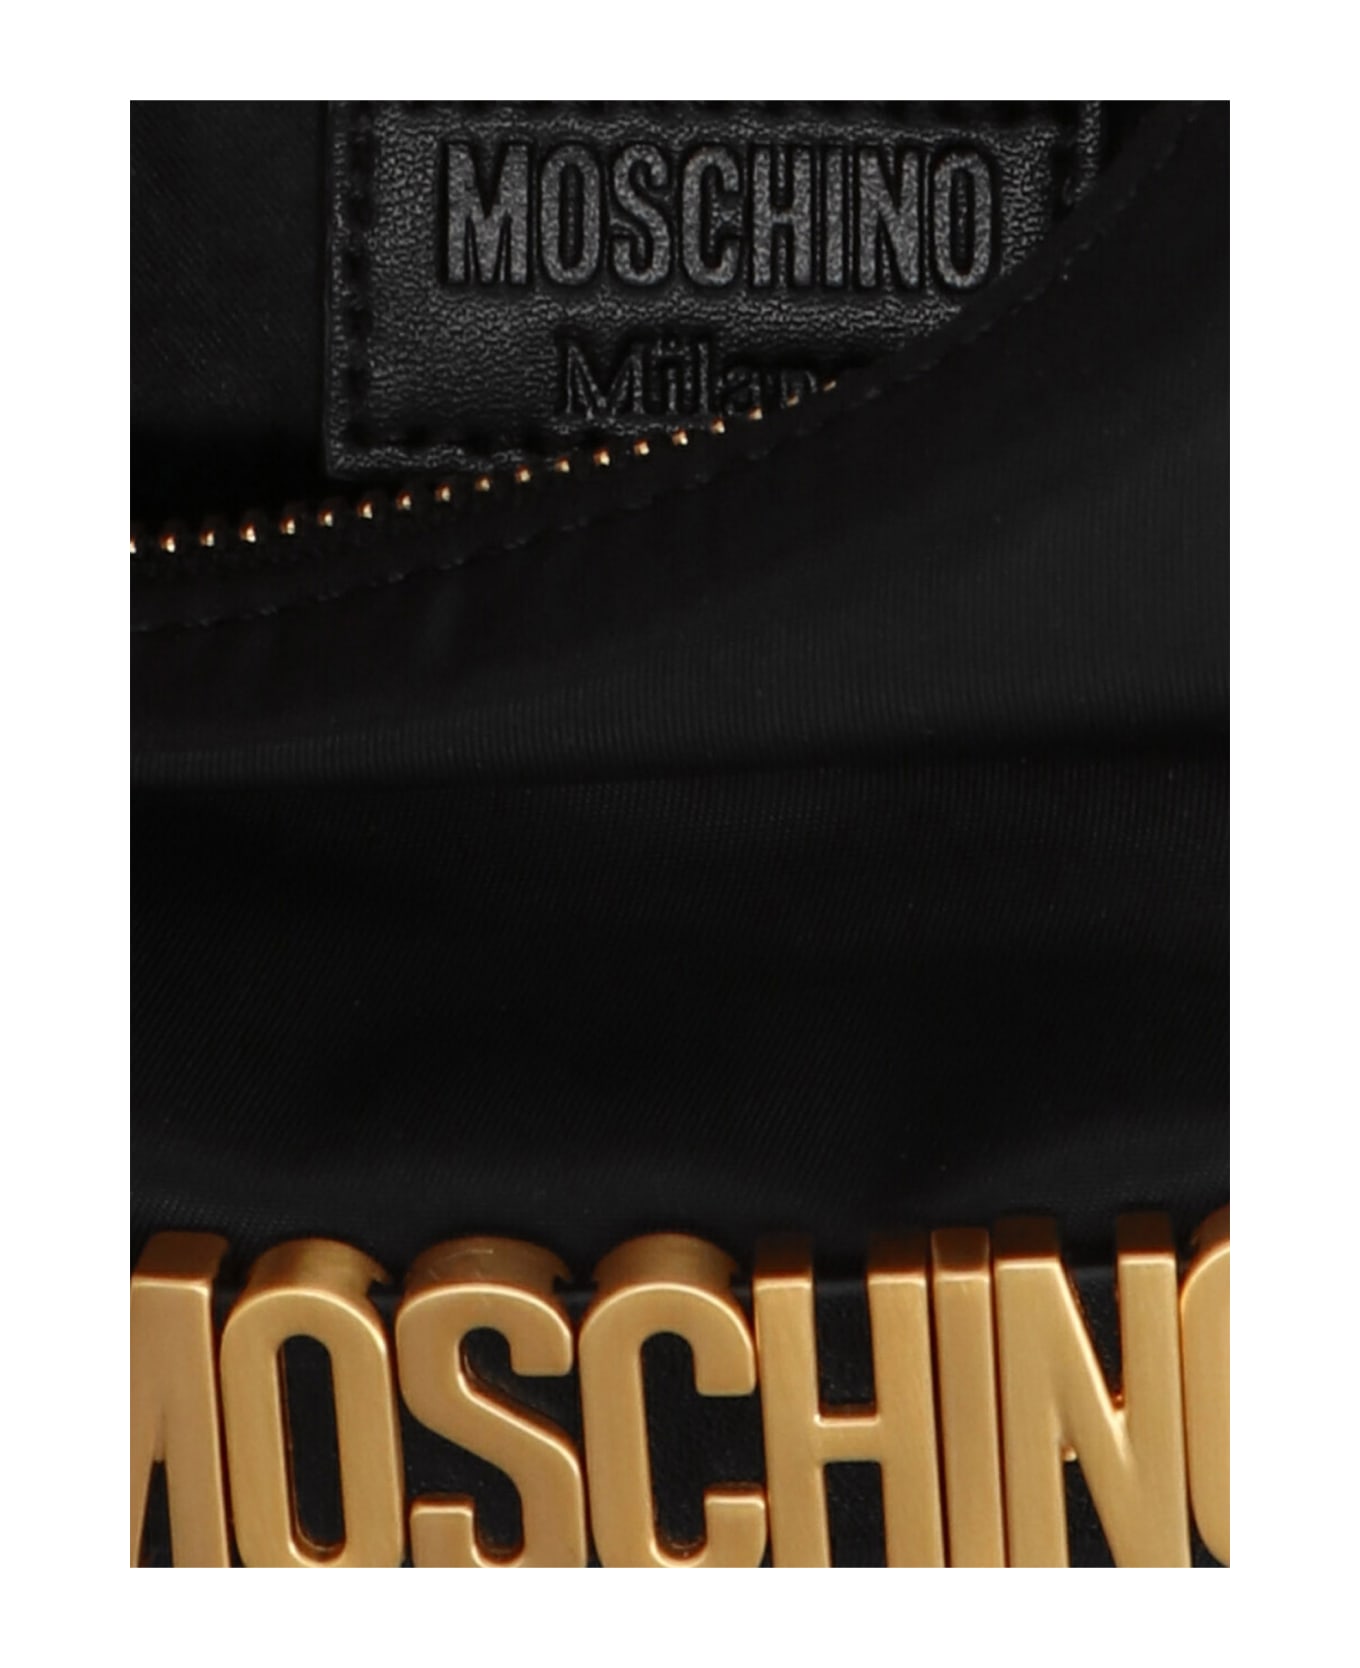 Moschino Logo Clutch Bag - Black  